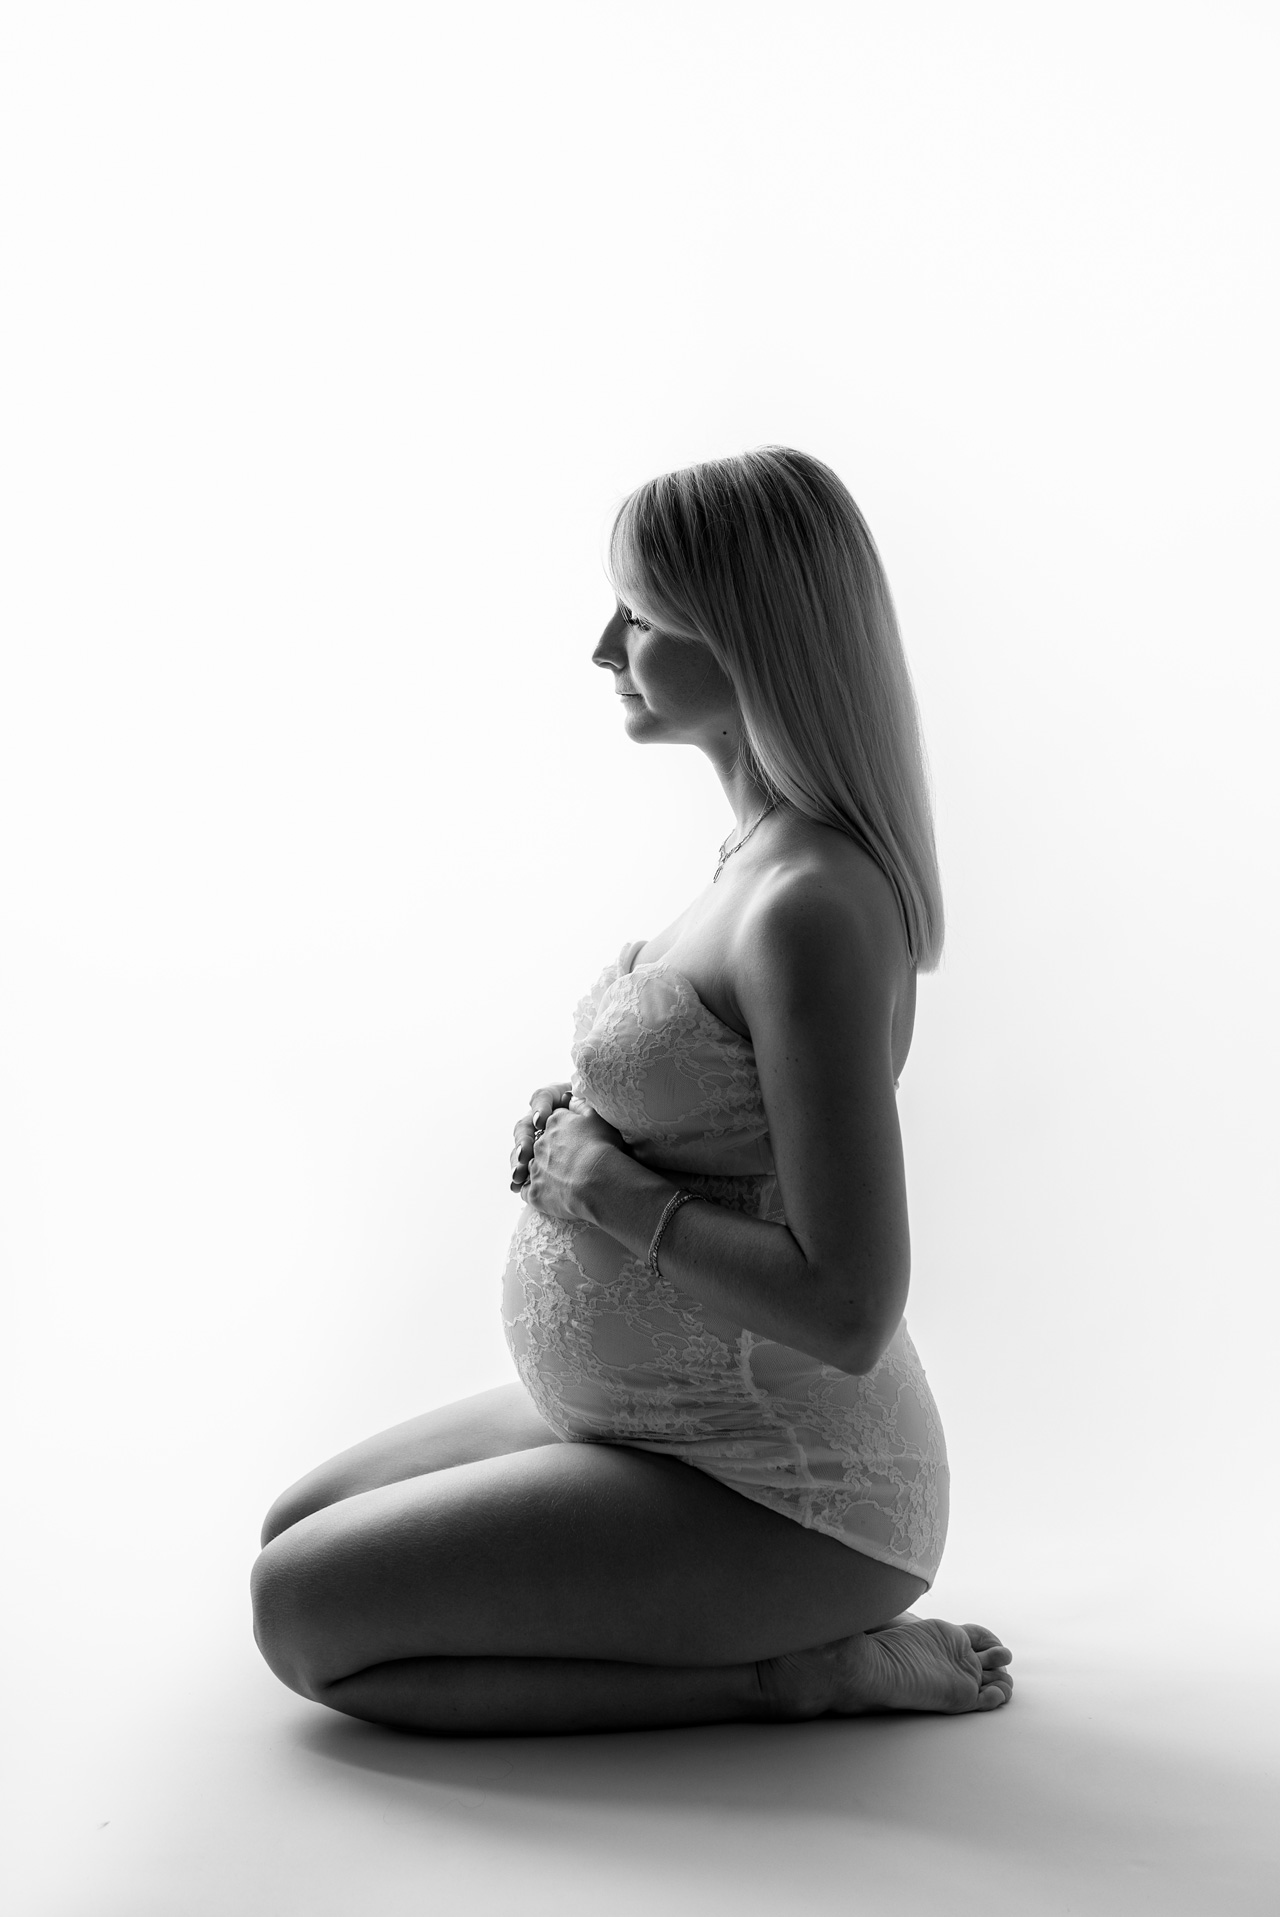 grossesse contre jour